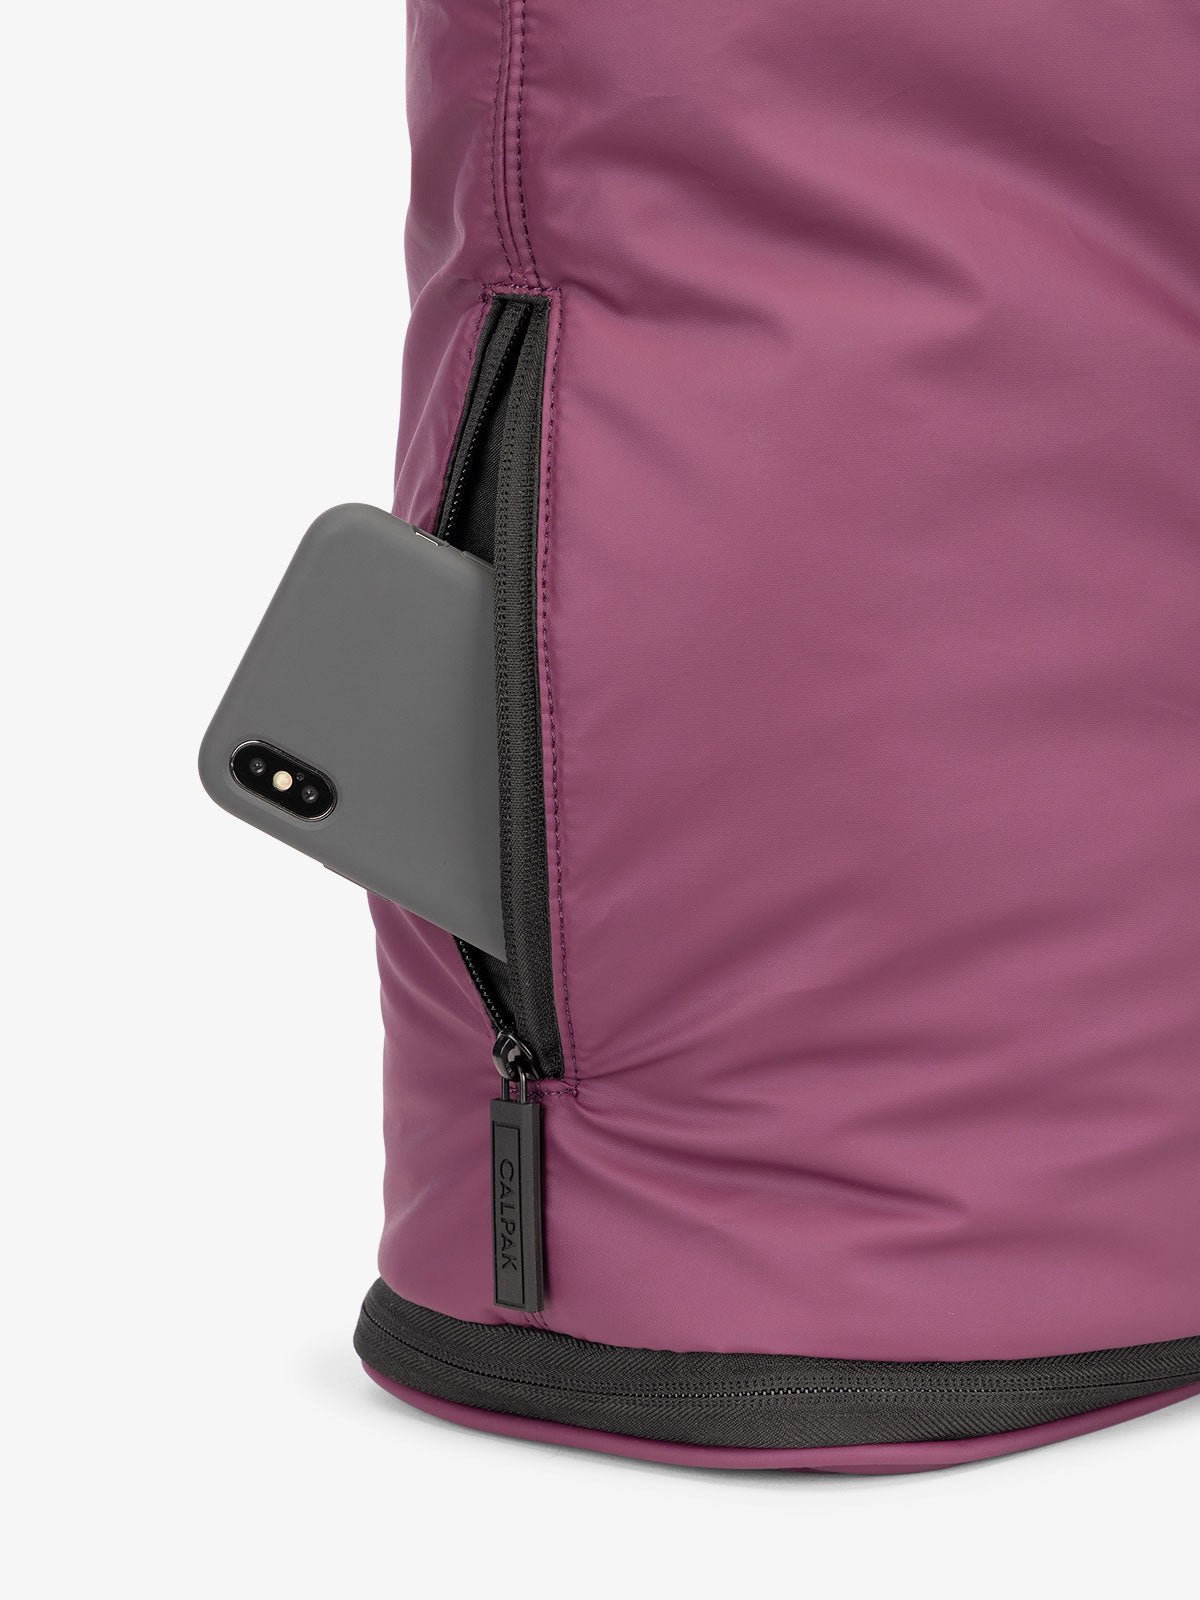 CALPAK Luka expandable laptop bag with hidden zippered pockets in plum